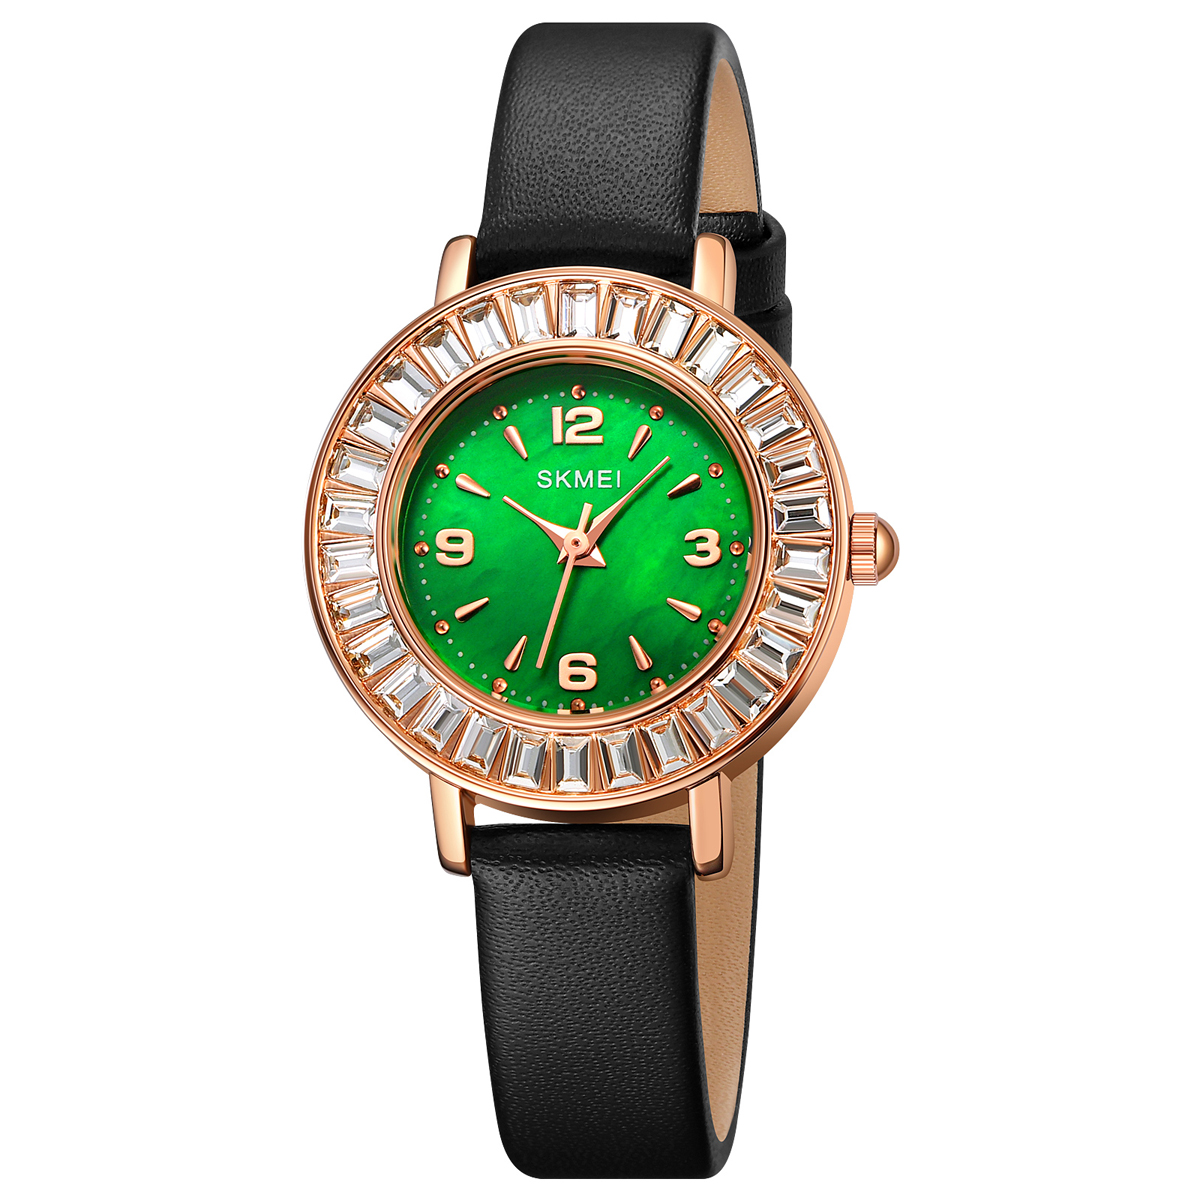 Skmei lady leather watch-Skmei Watch Manufacture Co.,Ltd